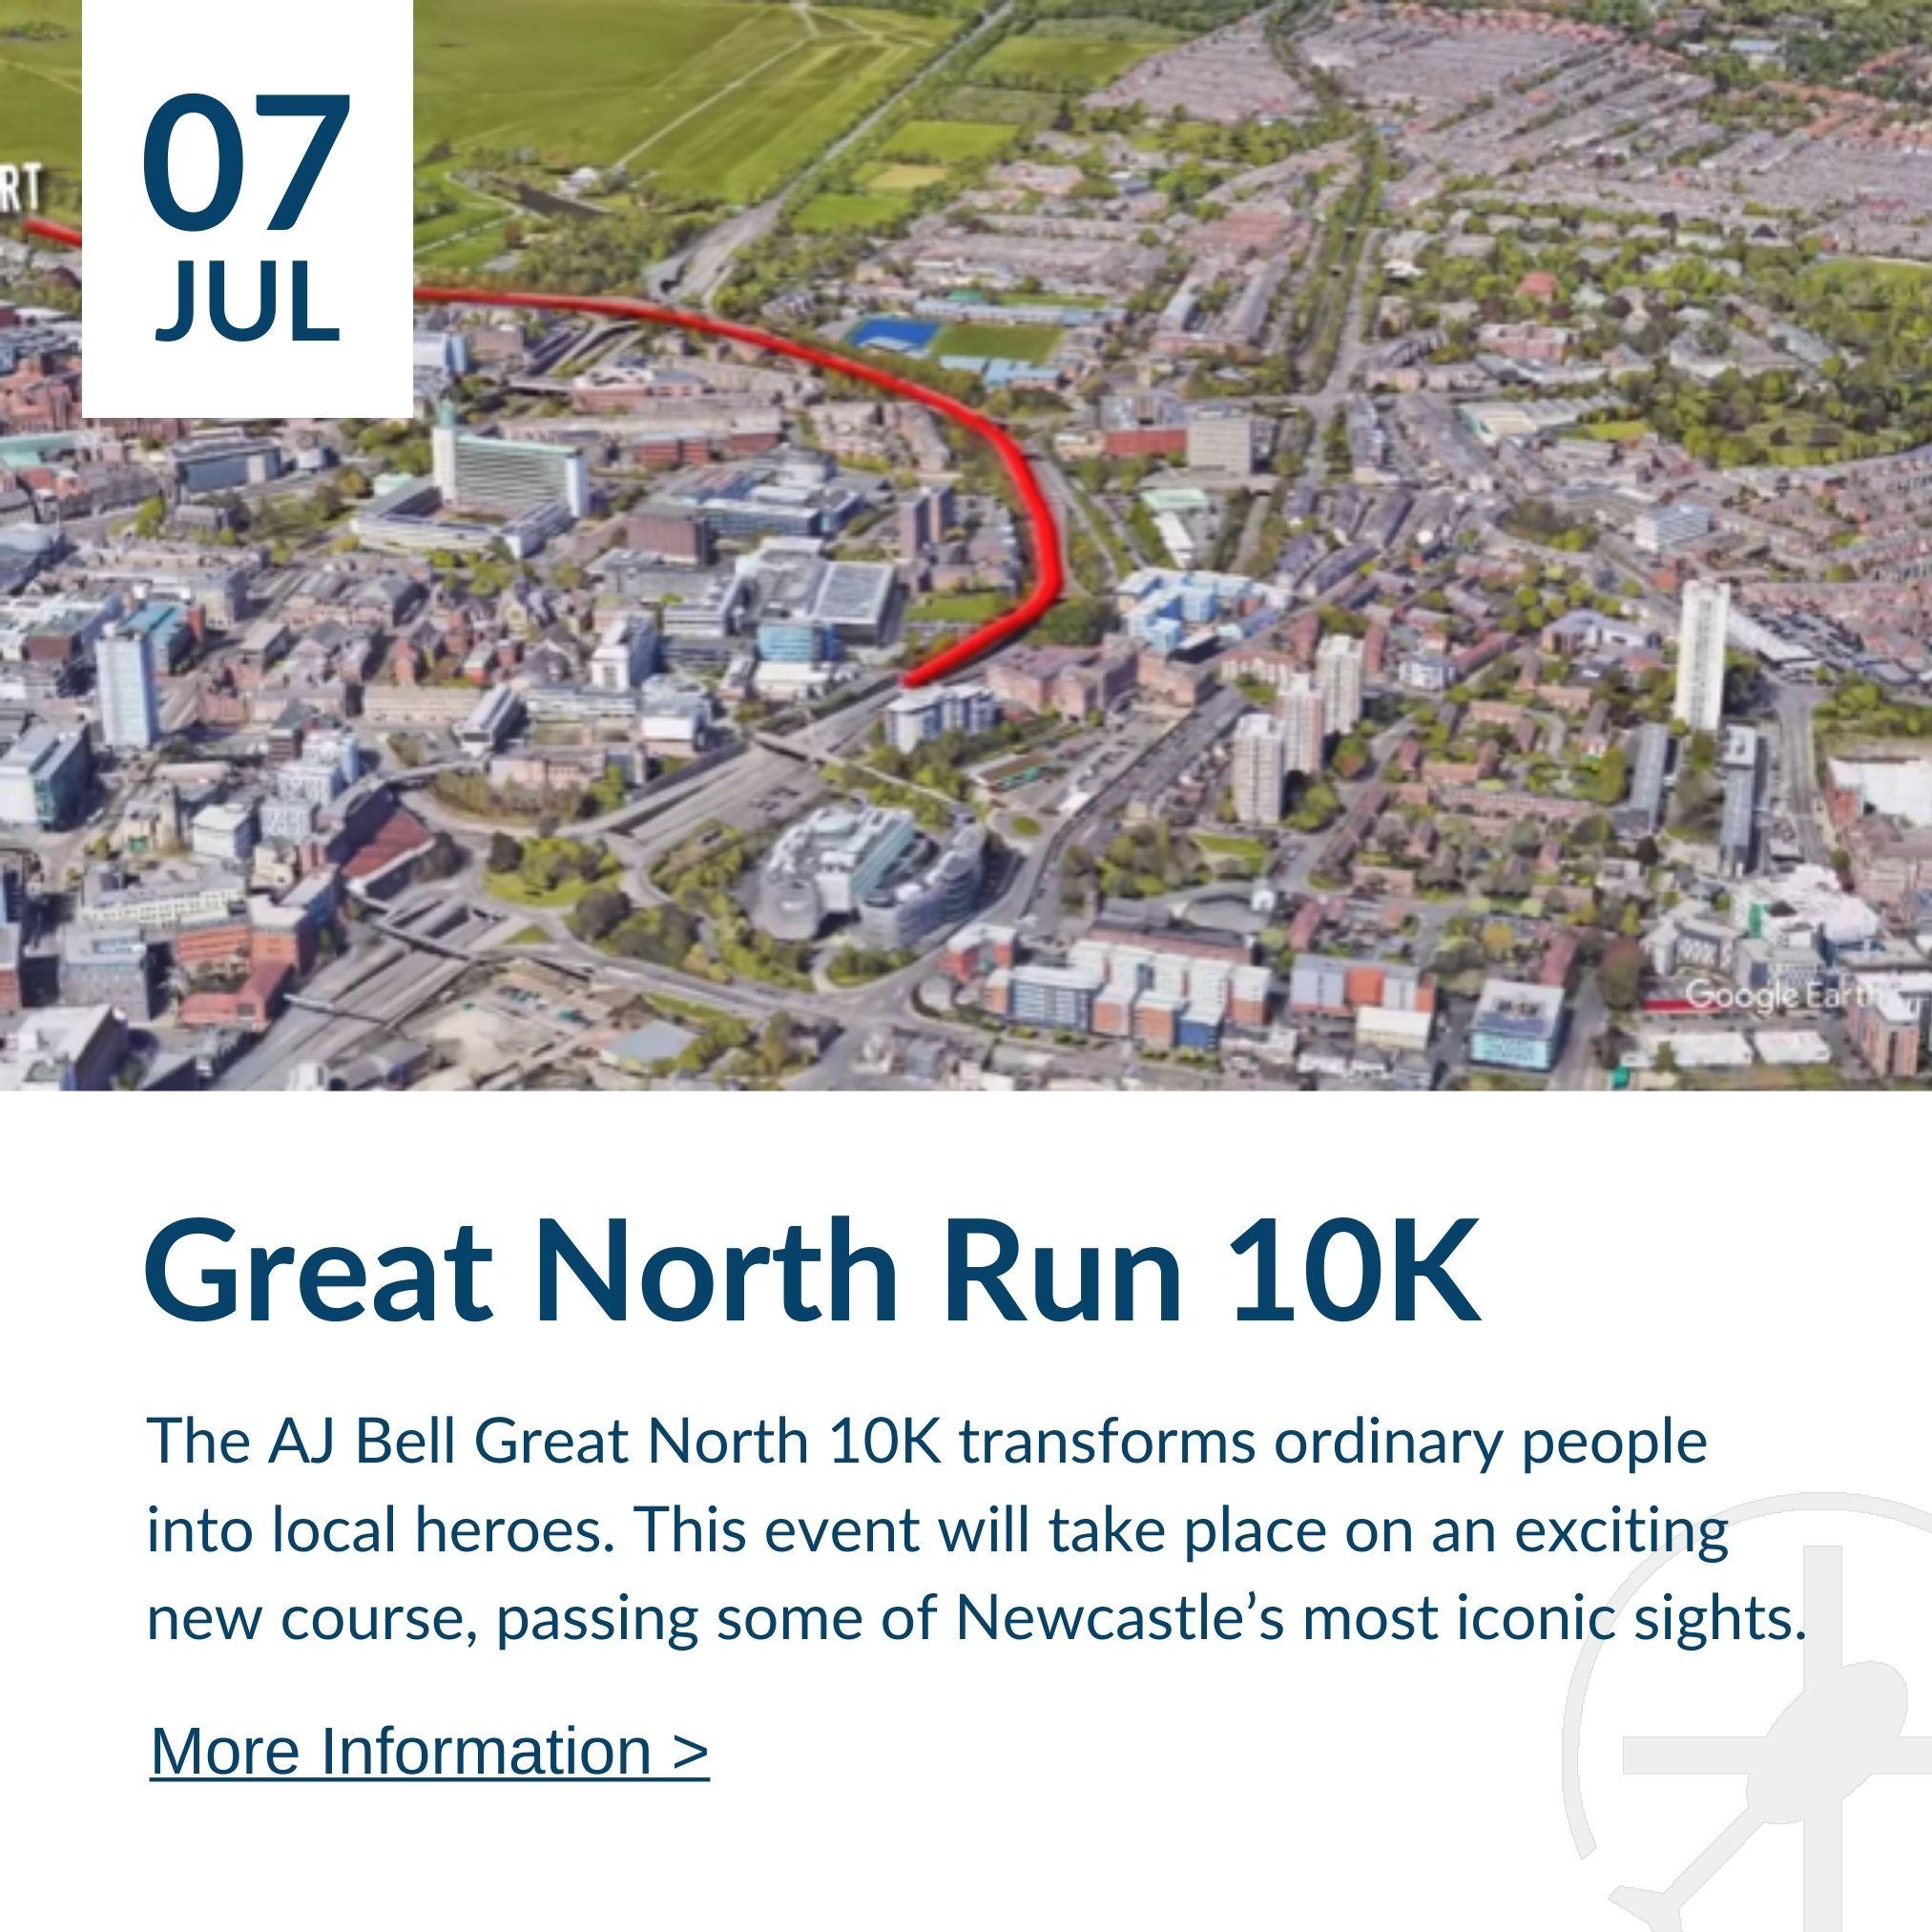 Events - Great North Run 10K